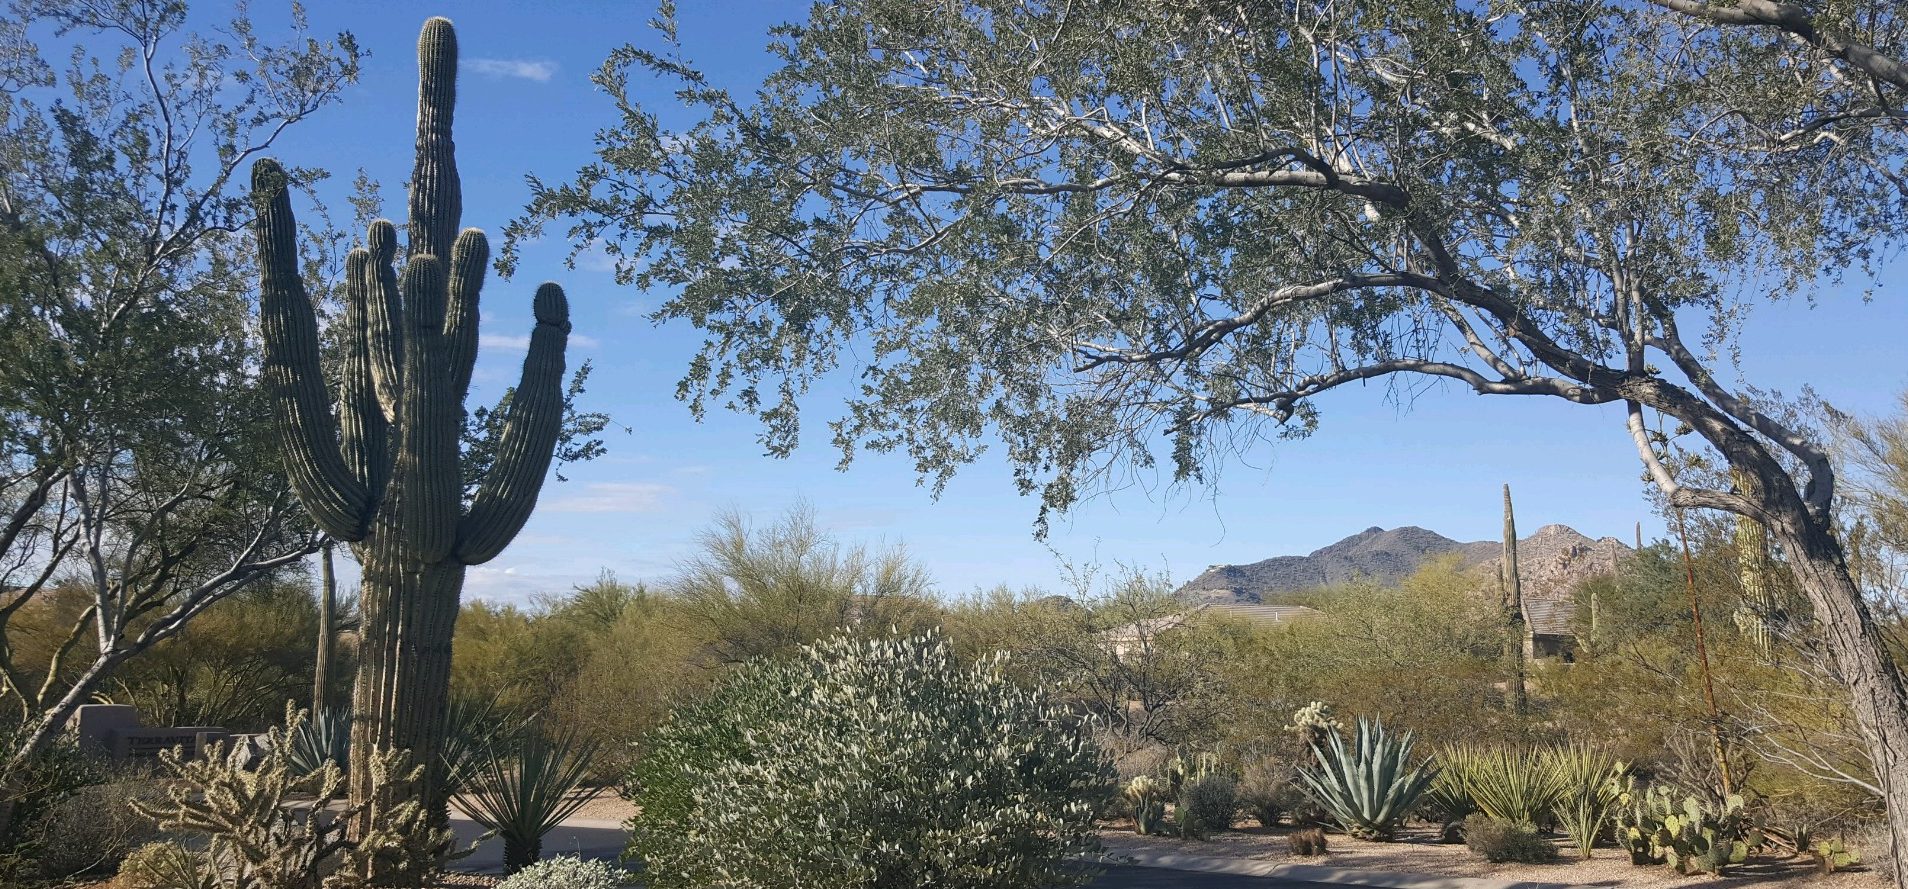 Scottsdale, Arizona scenic view